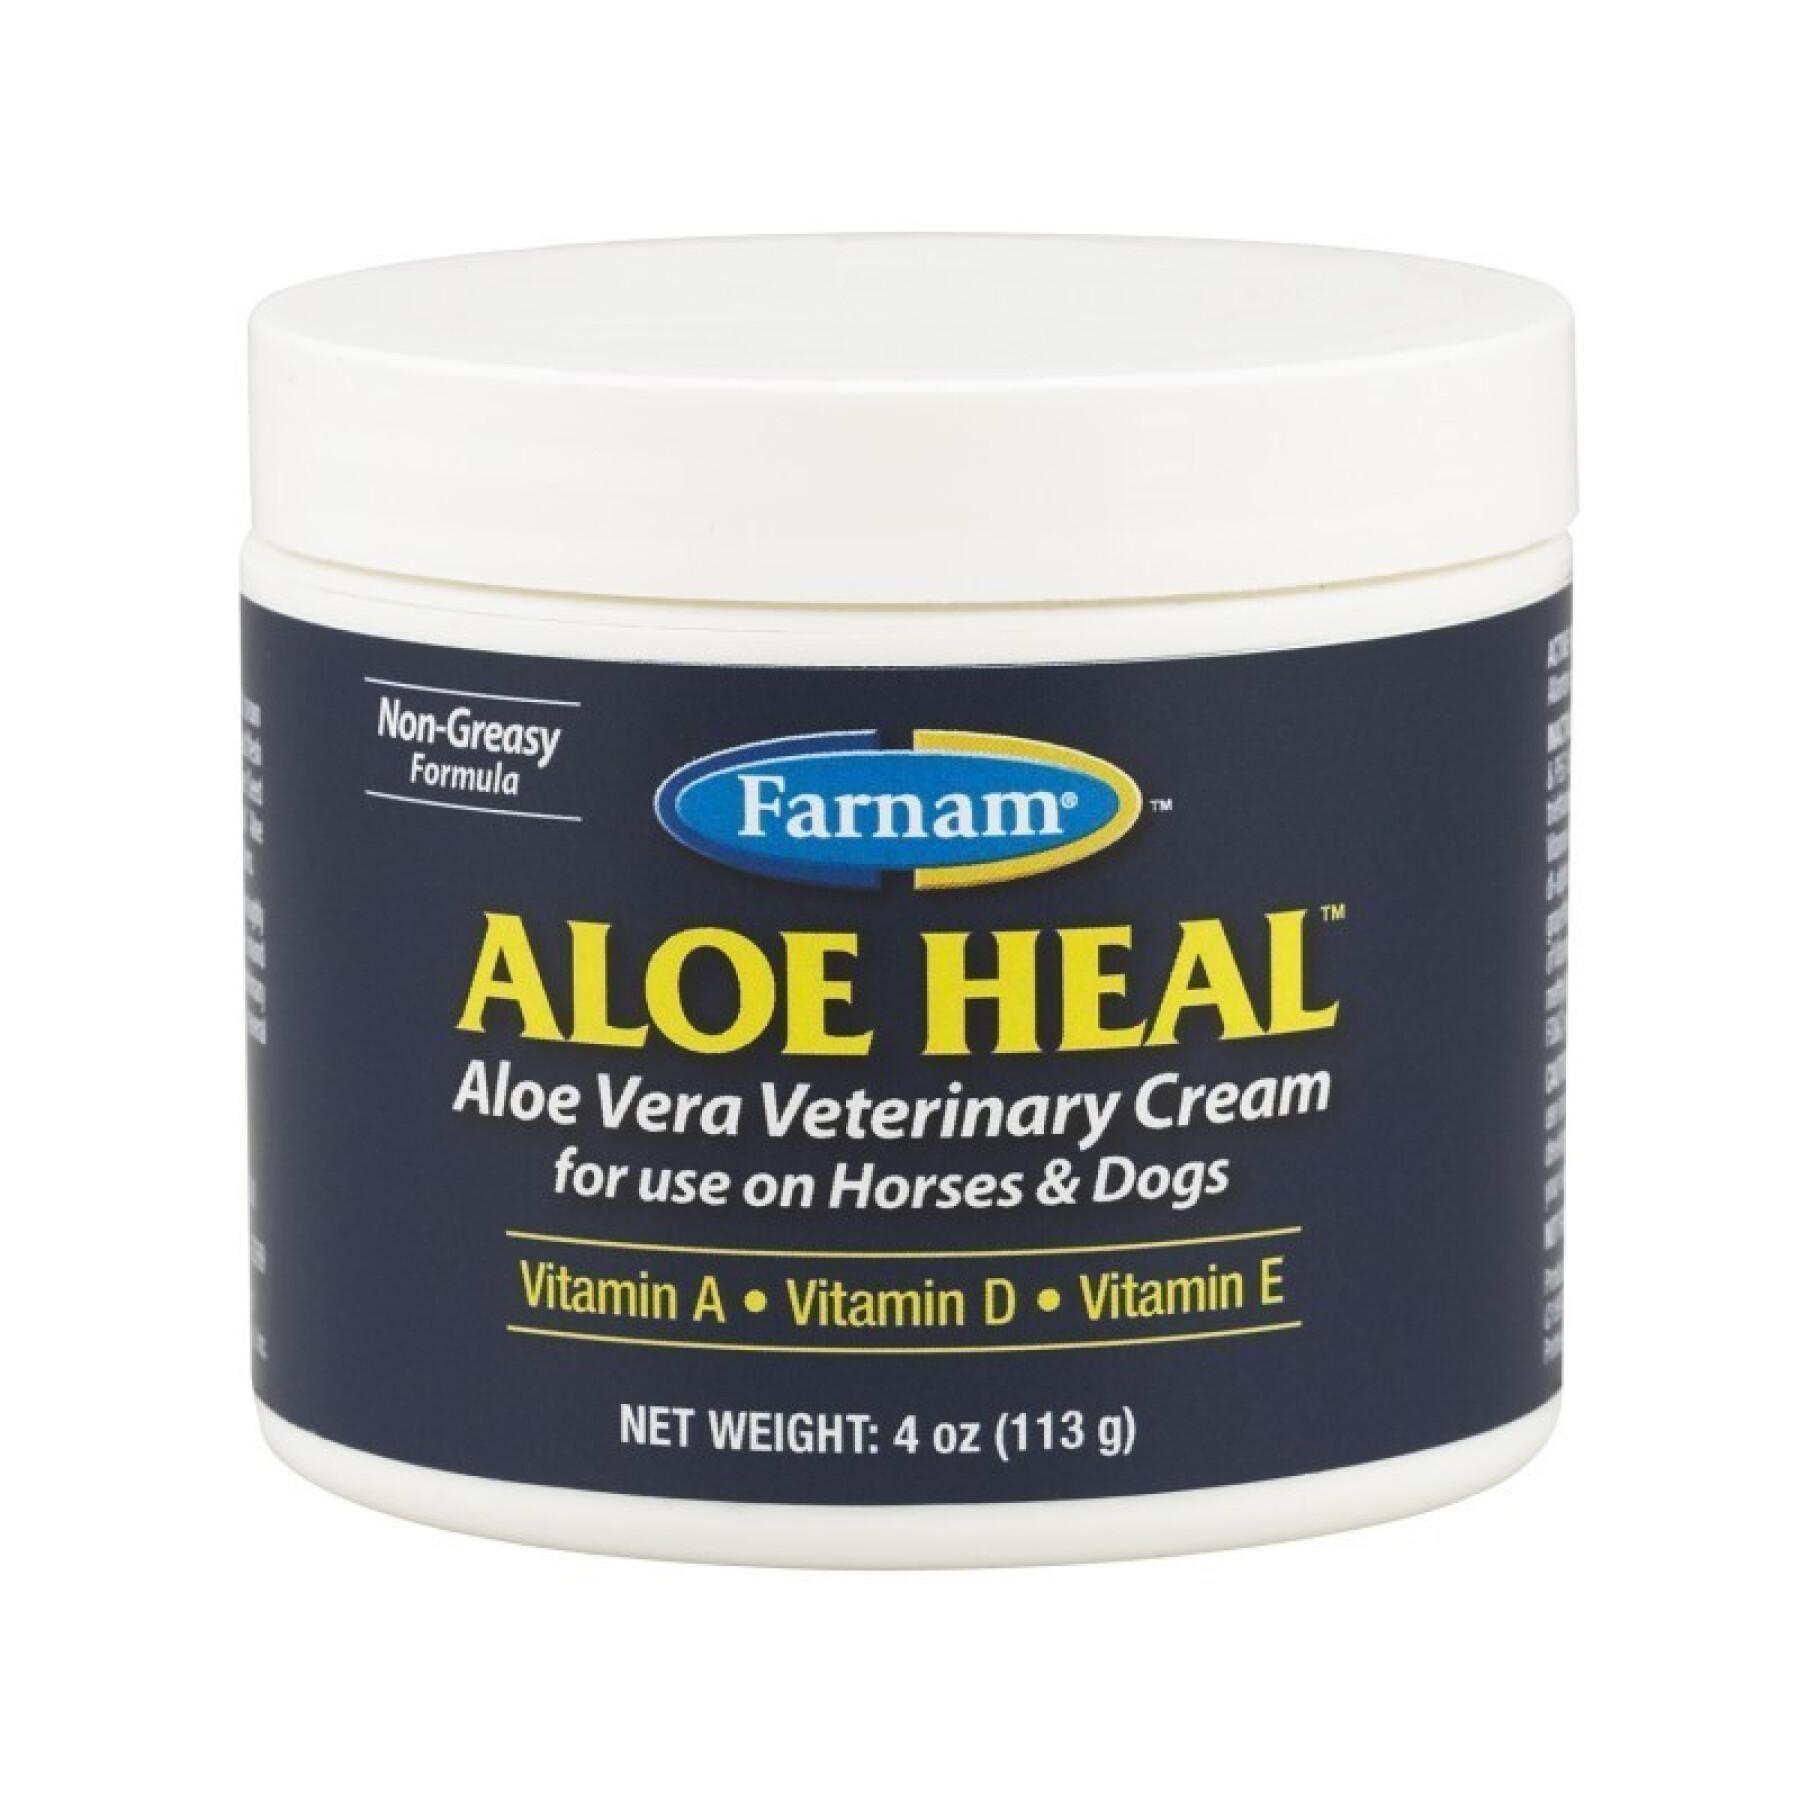 Healing cream for horses Farnam Aloe Heal 113 g